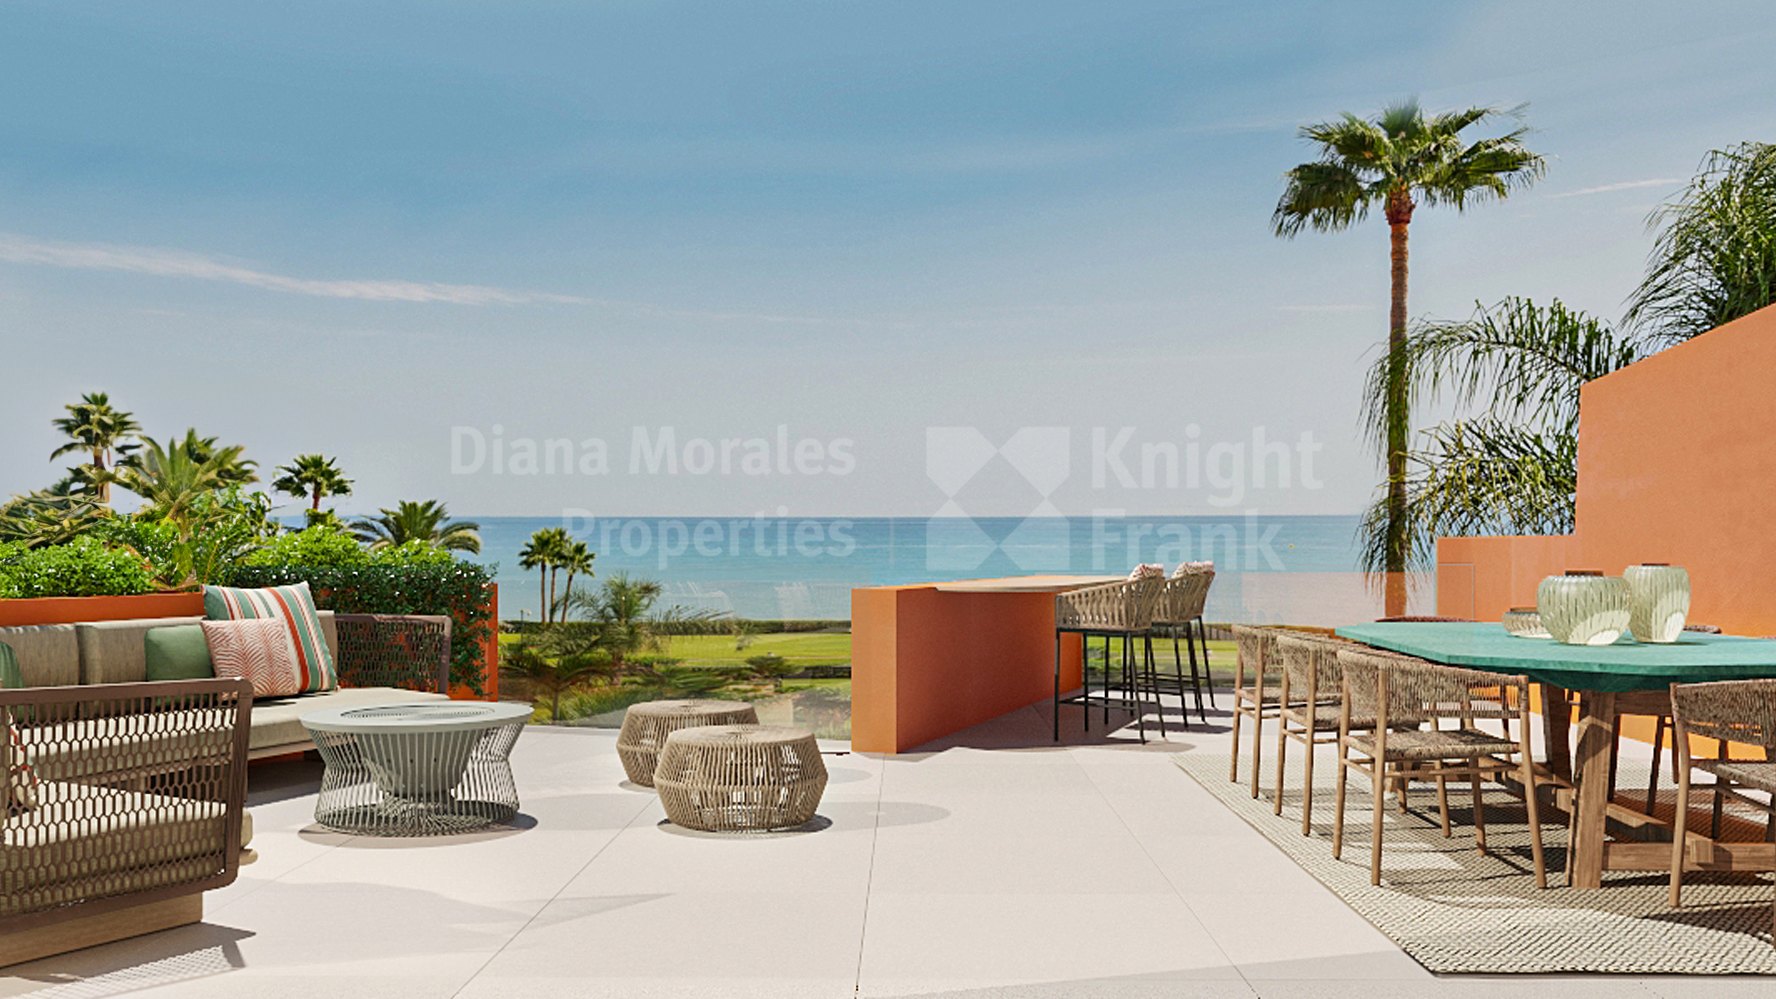 La Morera, Luxurious frontline beach penthouse apartment